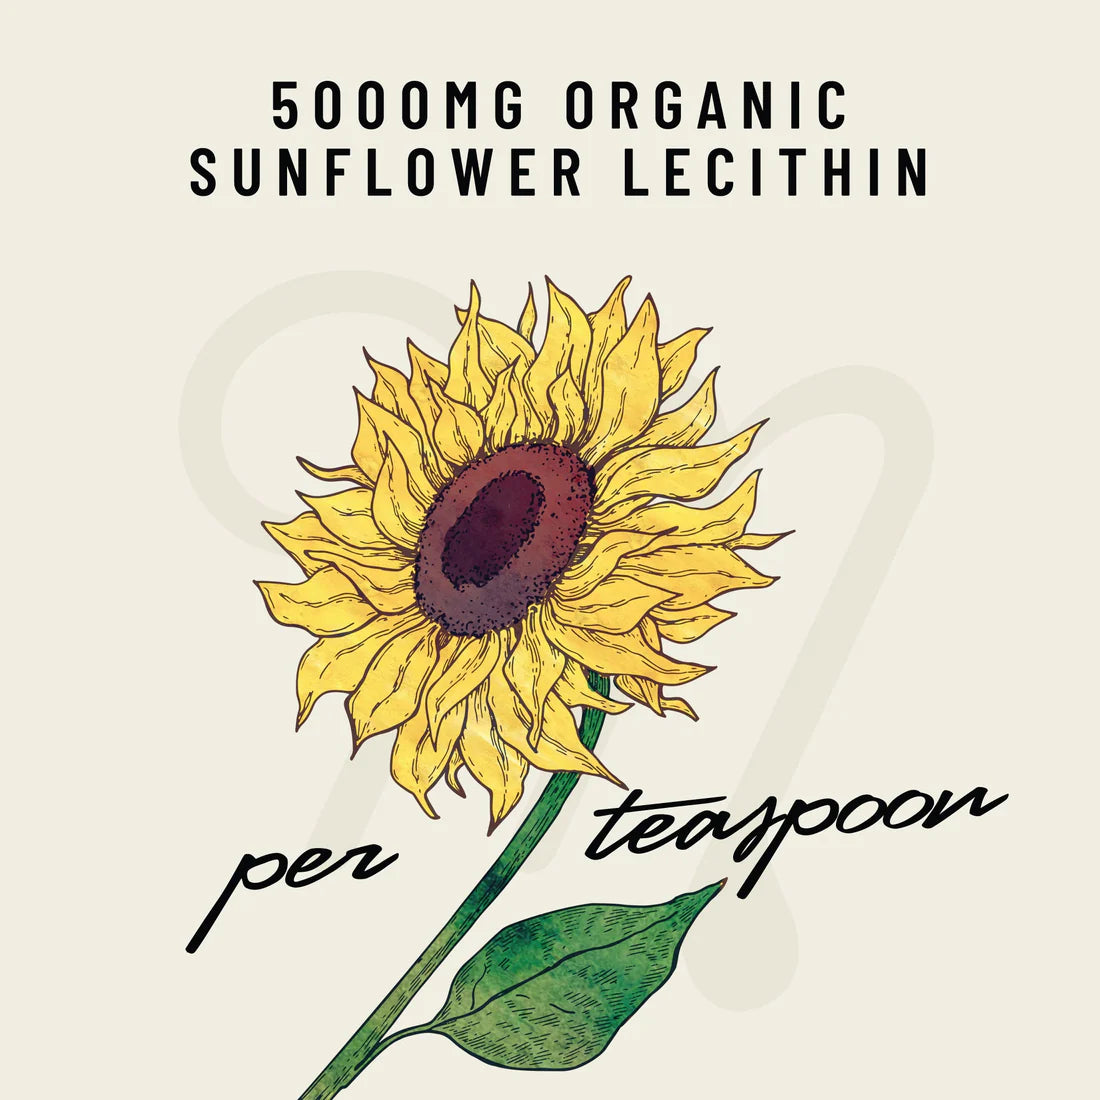 Liquid Sunflower Lecithin (Halal)